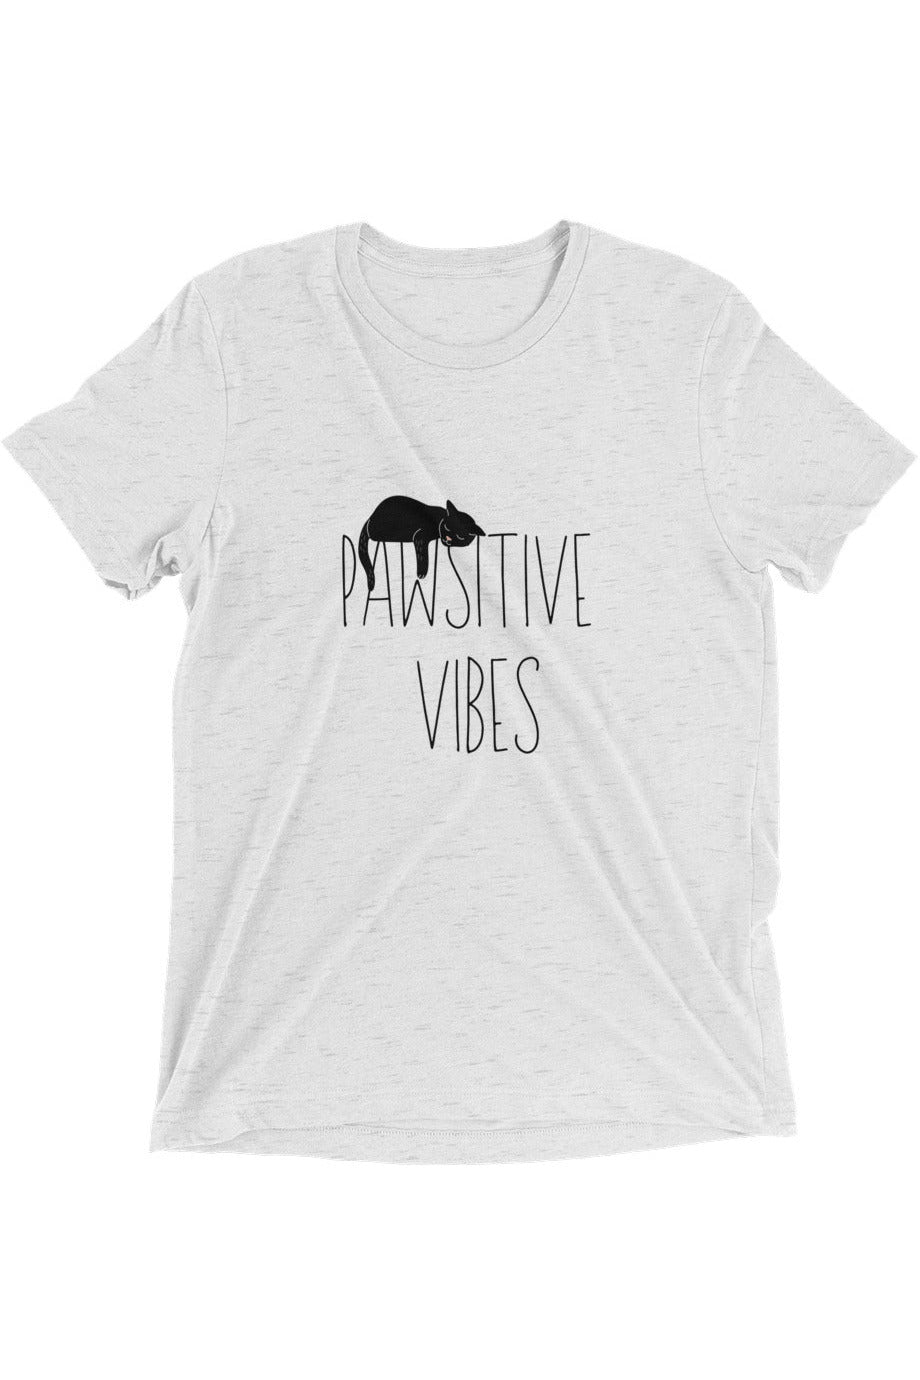 "Vibes" - Short sleeve t-shirt